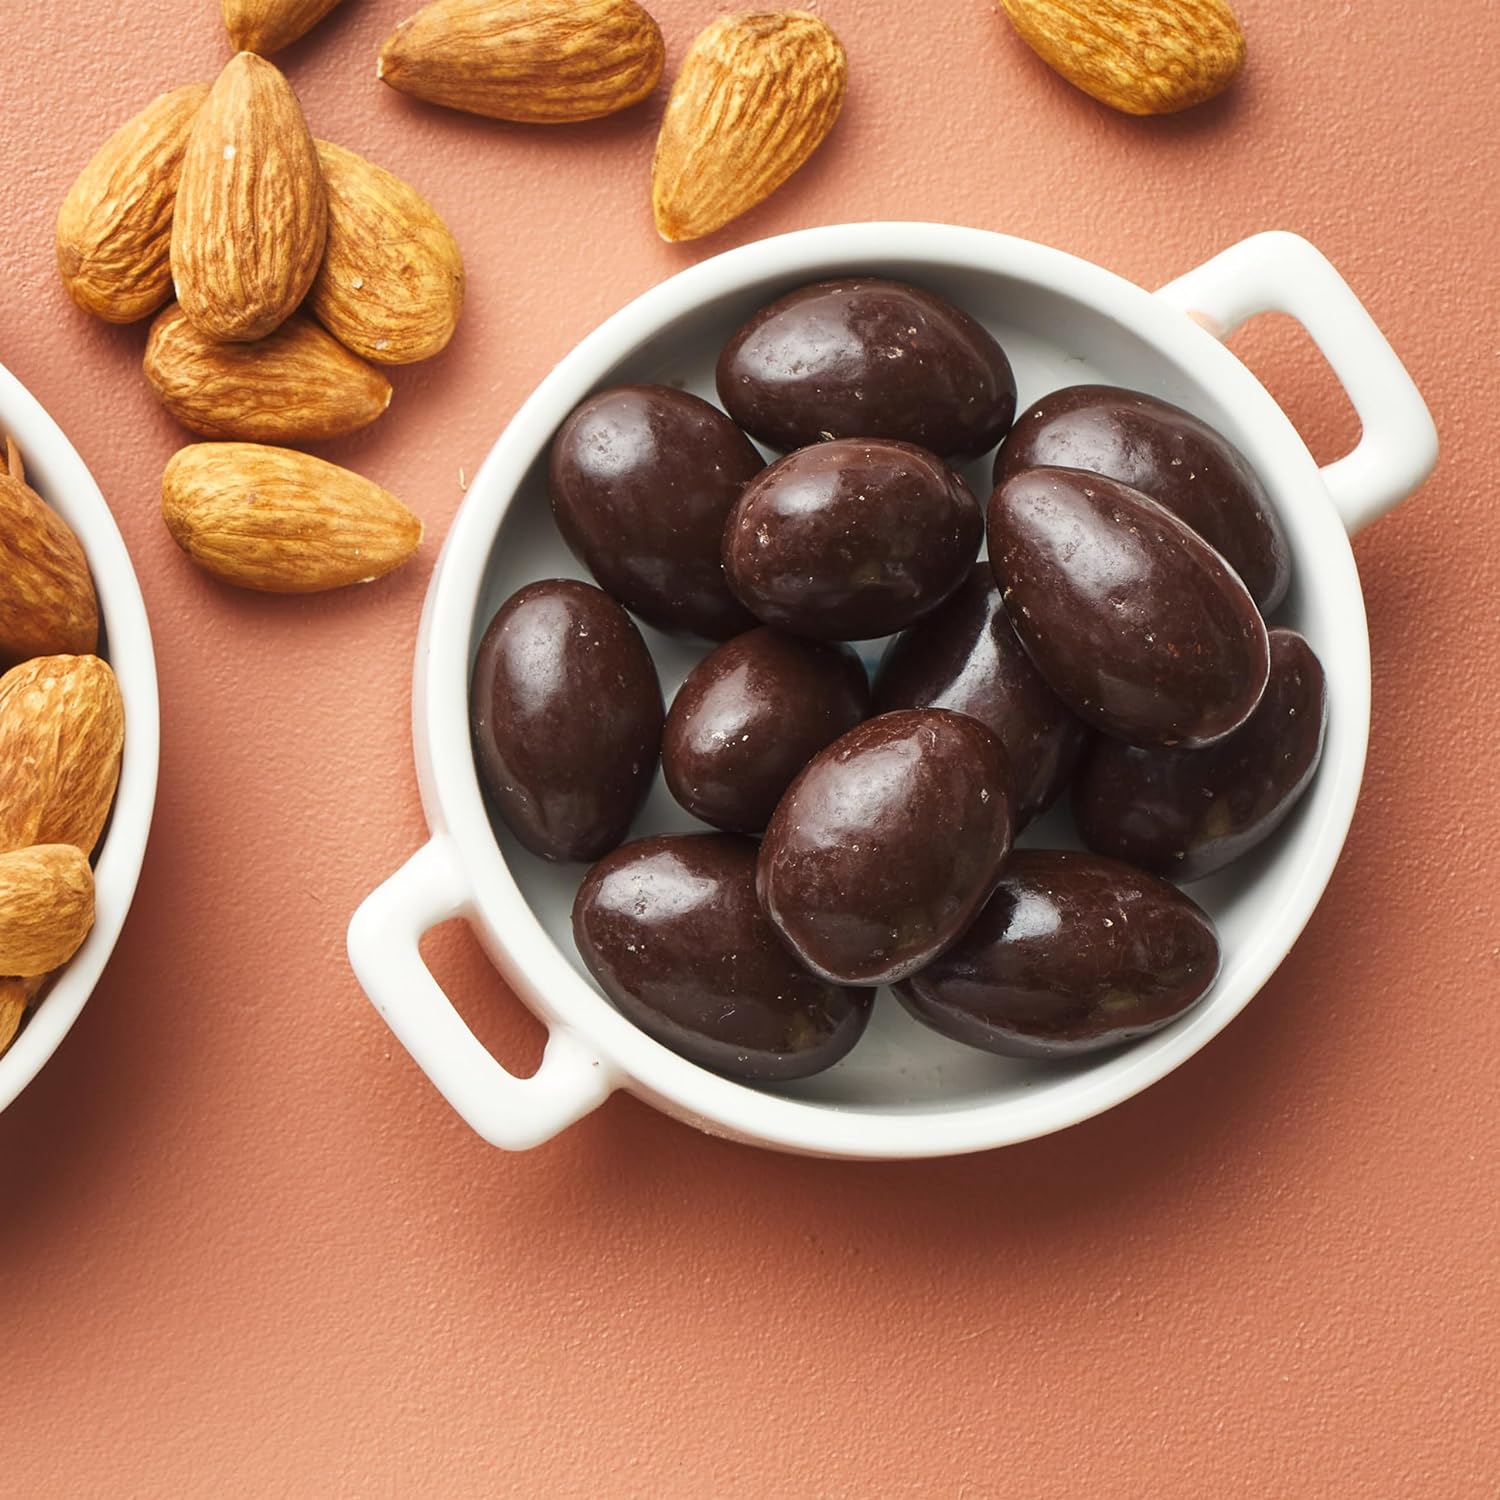 Yupik 60% Dark Chocolate Covered Almonds, 2.2 lb : Grocery & Gourmet Food